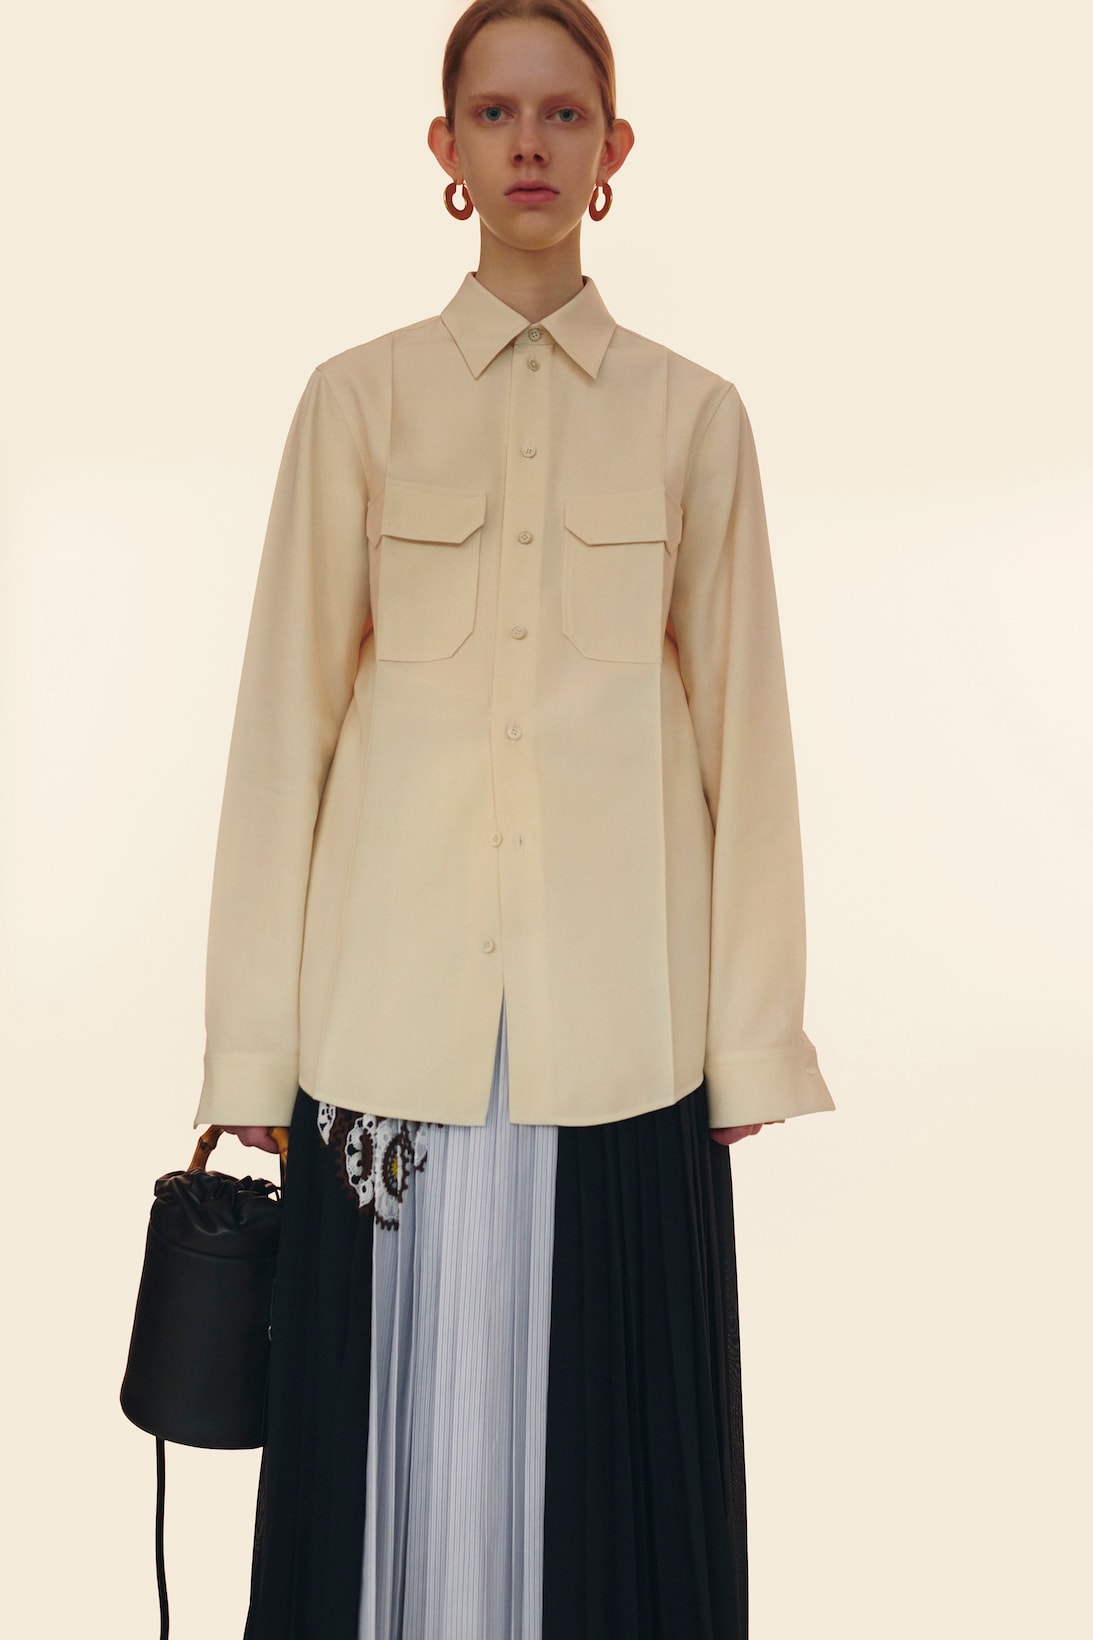 jil sander resort 2020 collection fashion designer minimal simplistic 